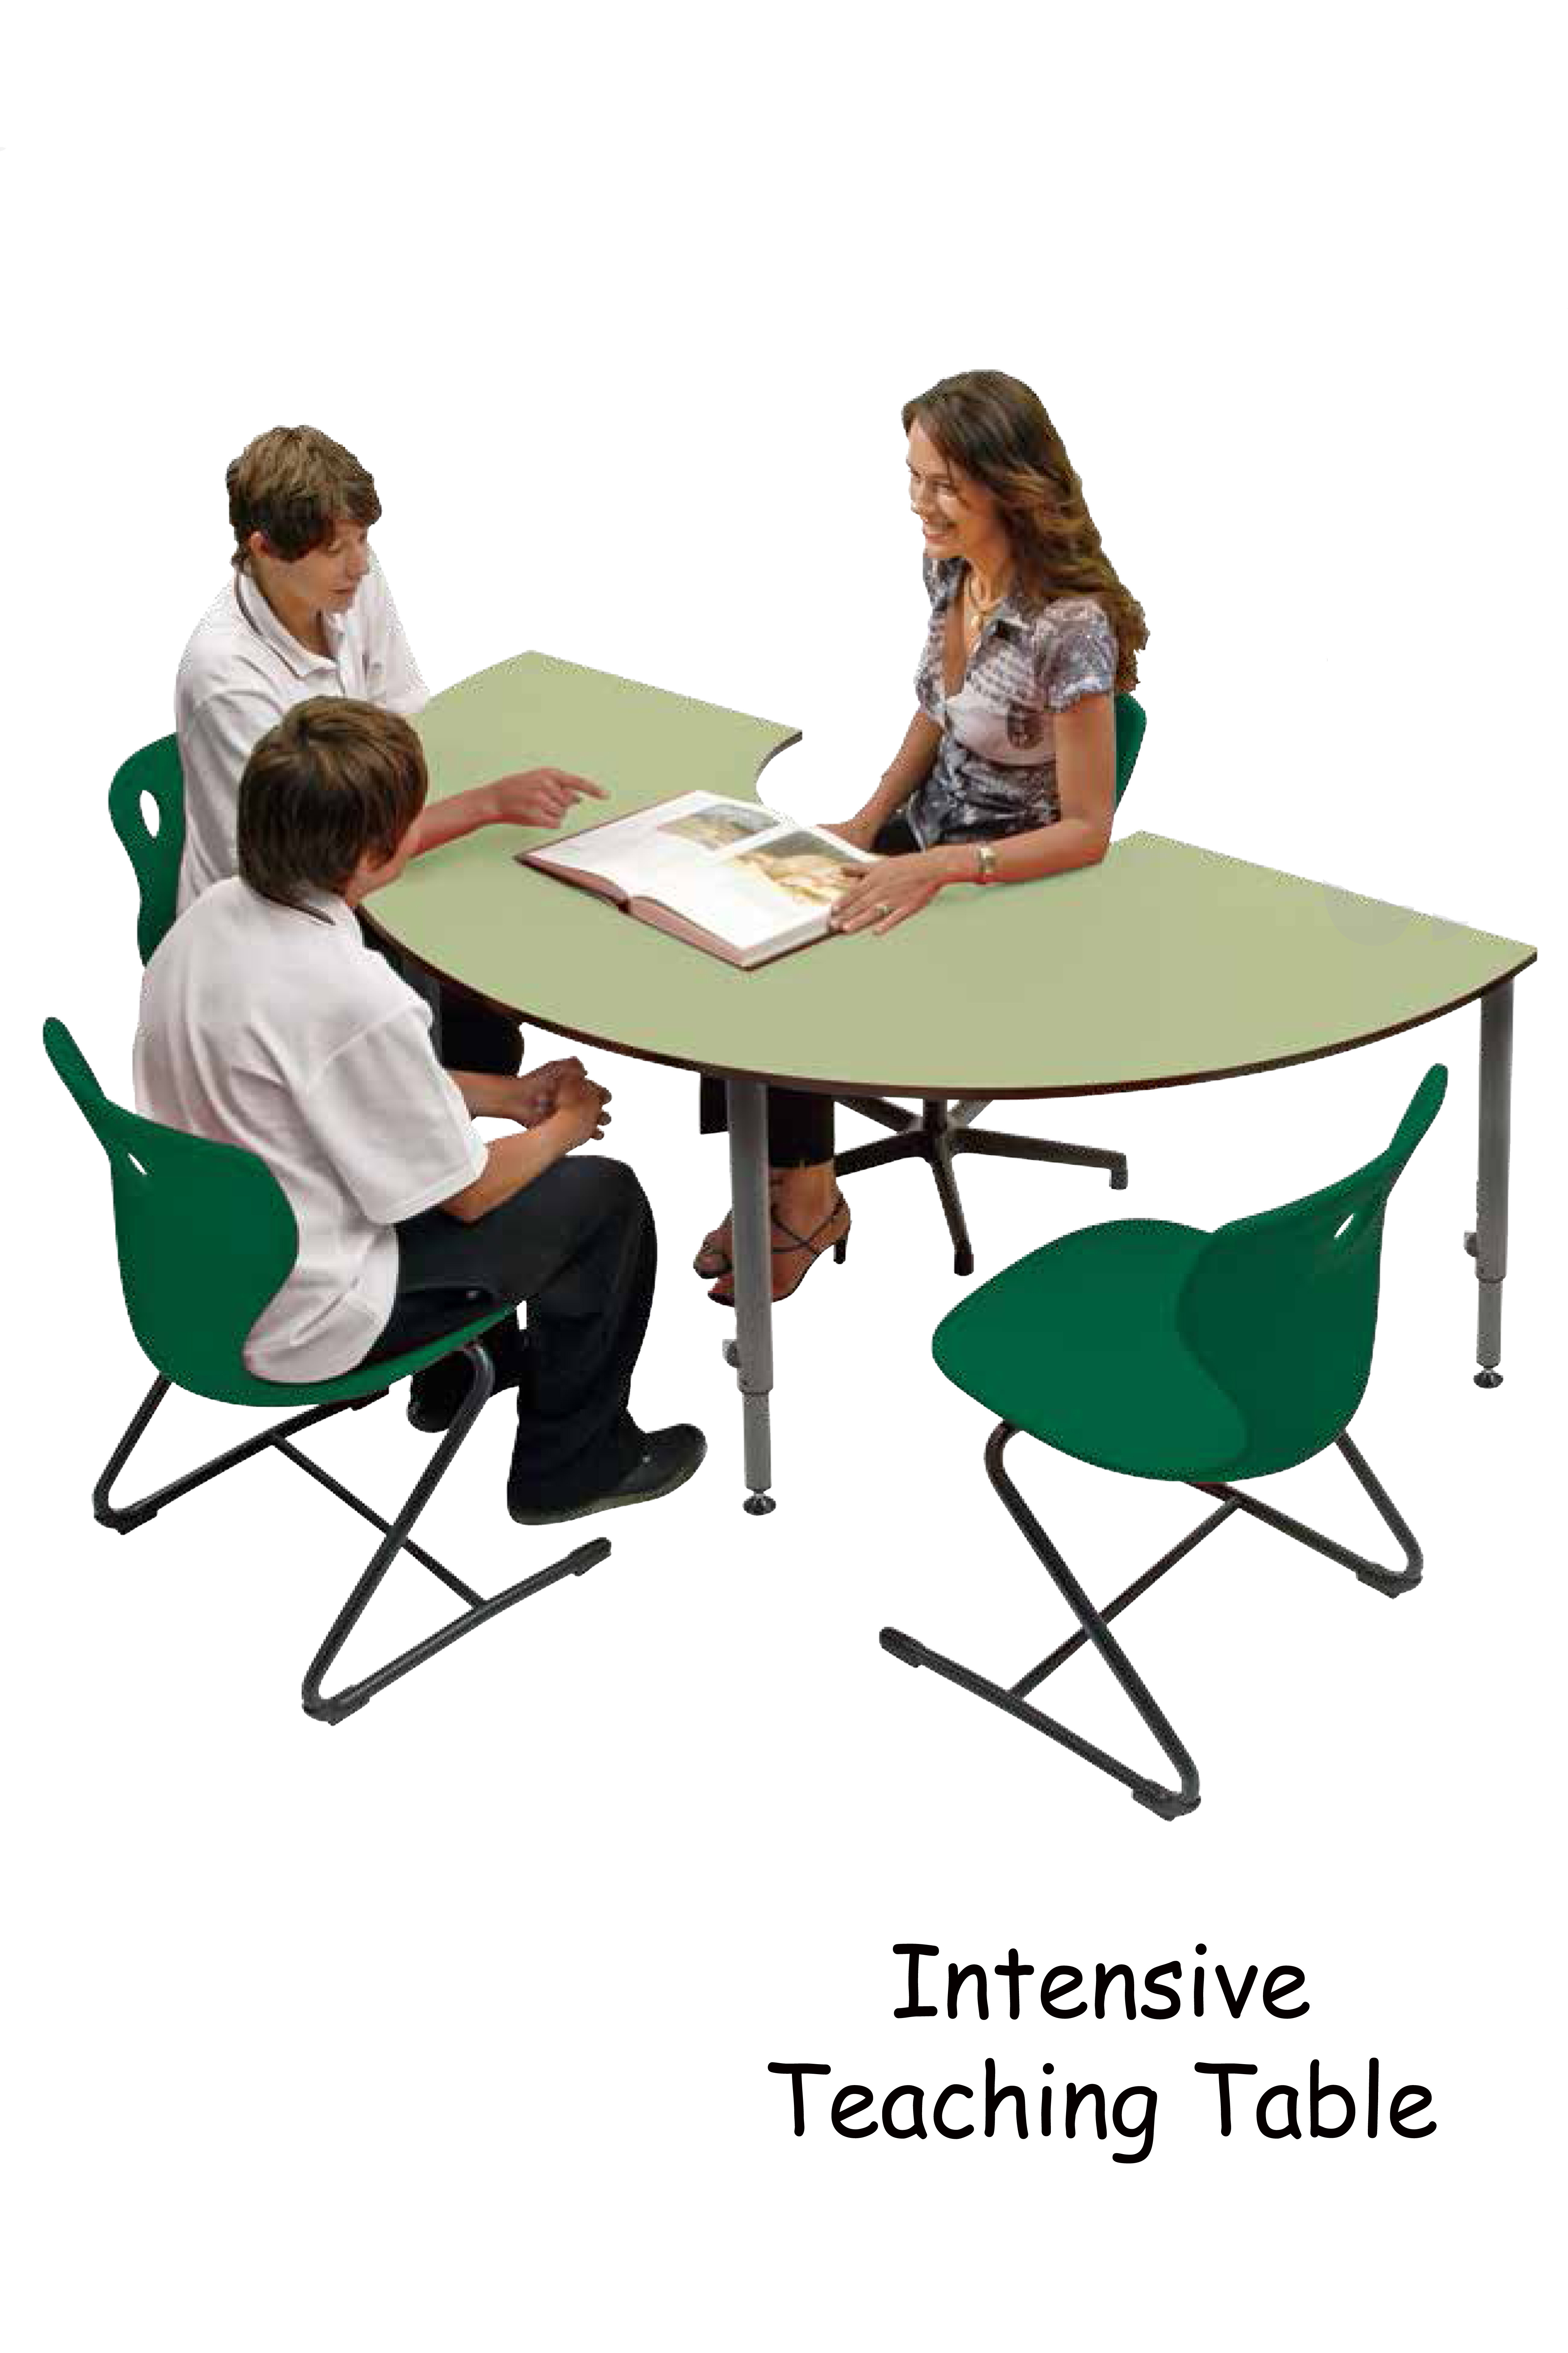 INTENSIVE TEACHING TABLE